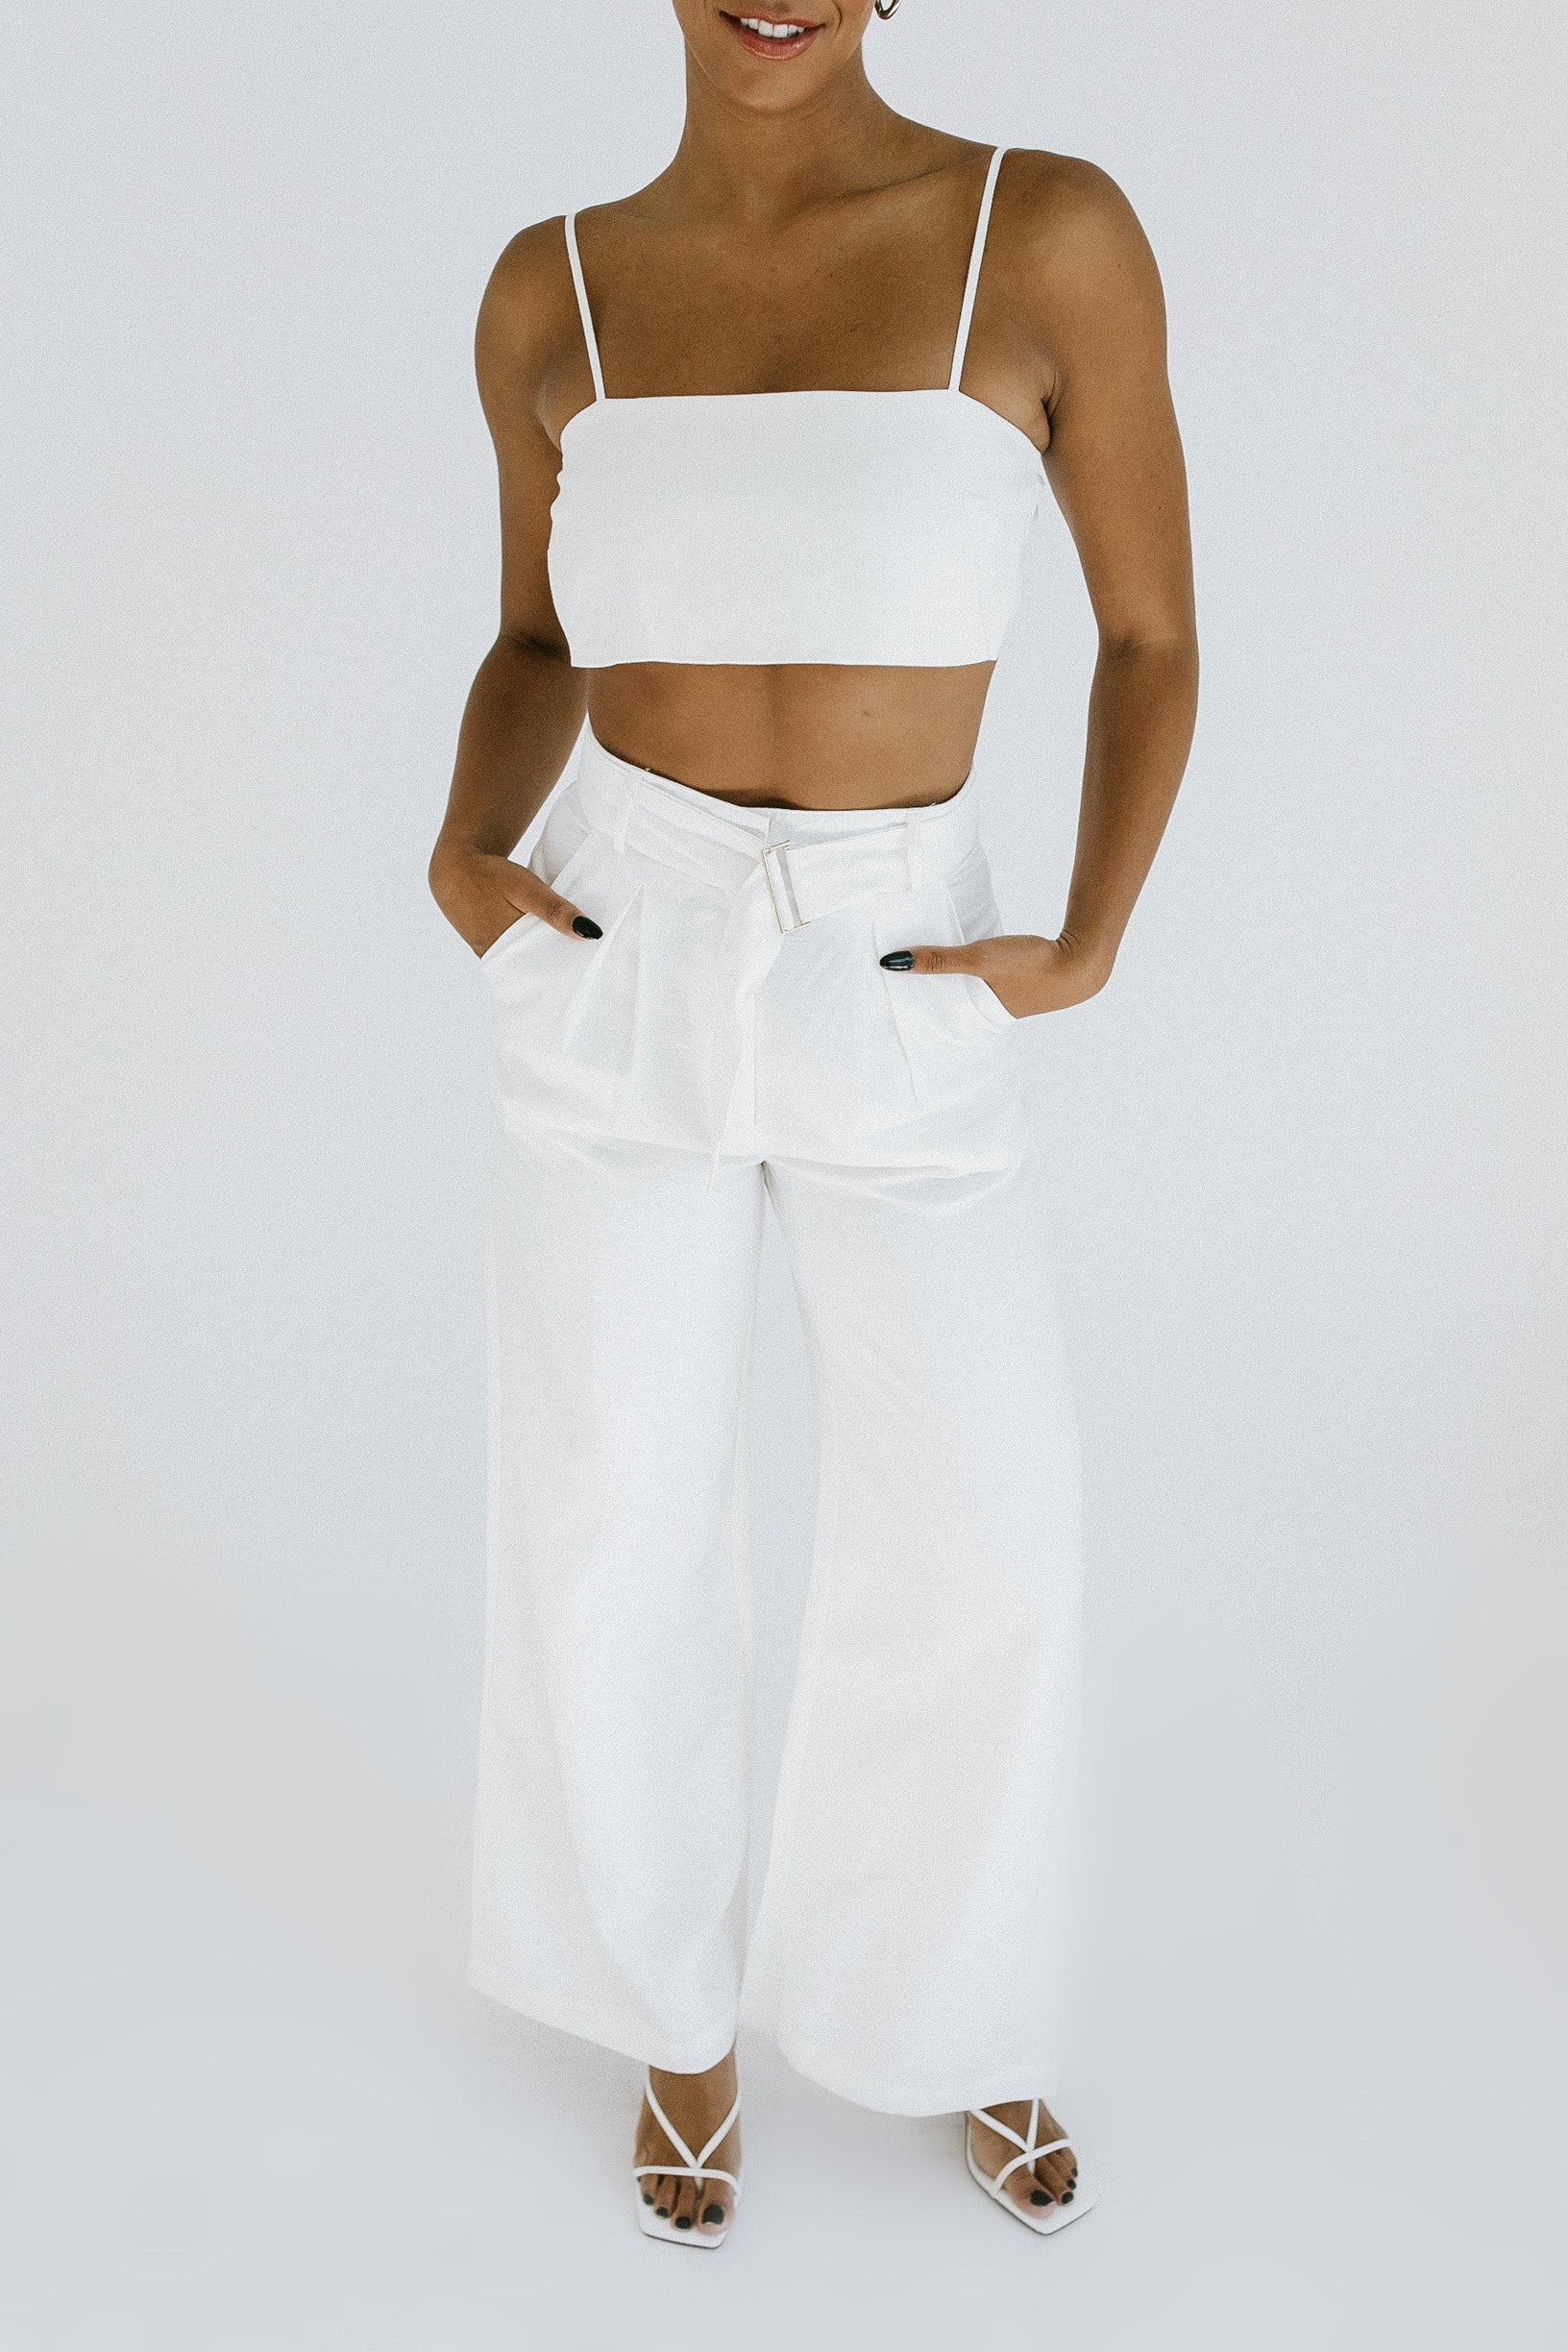 Hales Crop Top + Pant Set - White